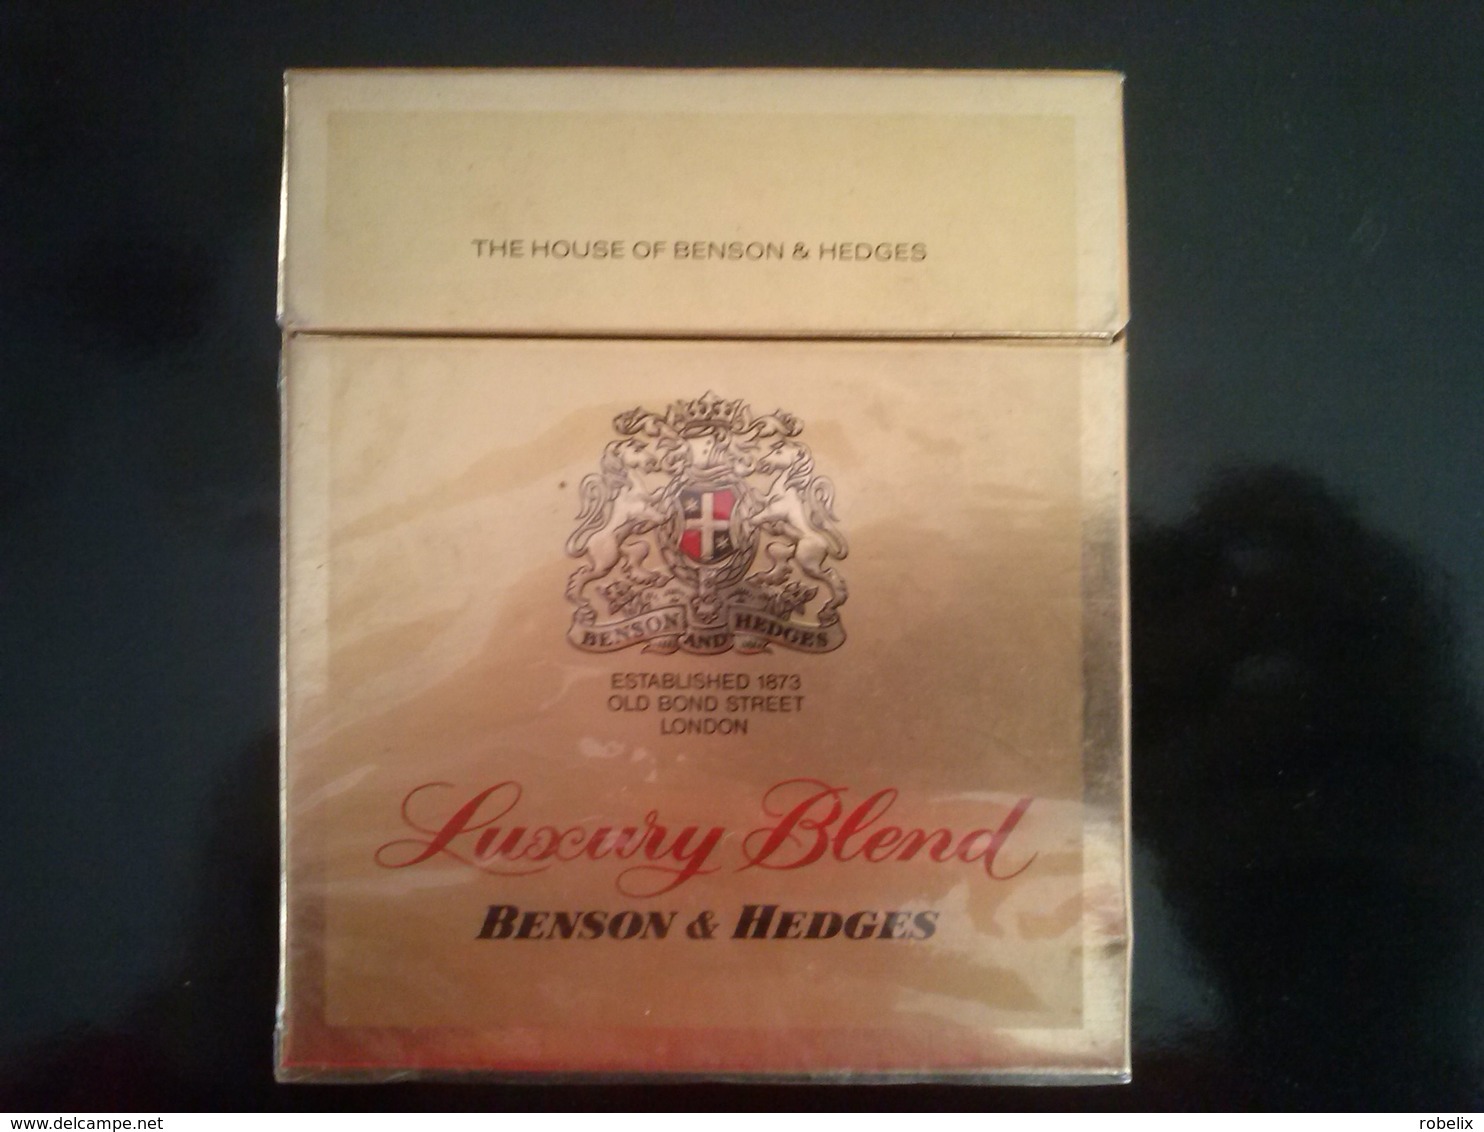 BENSON & HEDGES - Luxury Blend - English Empty Cigarettes Carton Box - Around (environ) 1970 - Etuis à Cigarettes Vides